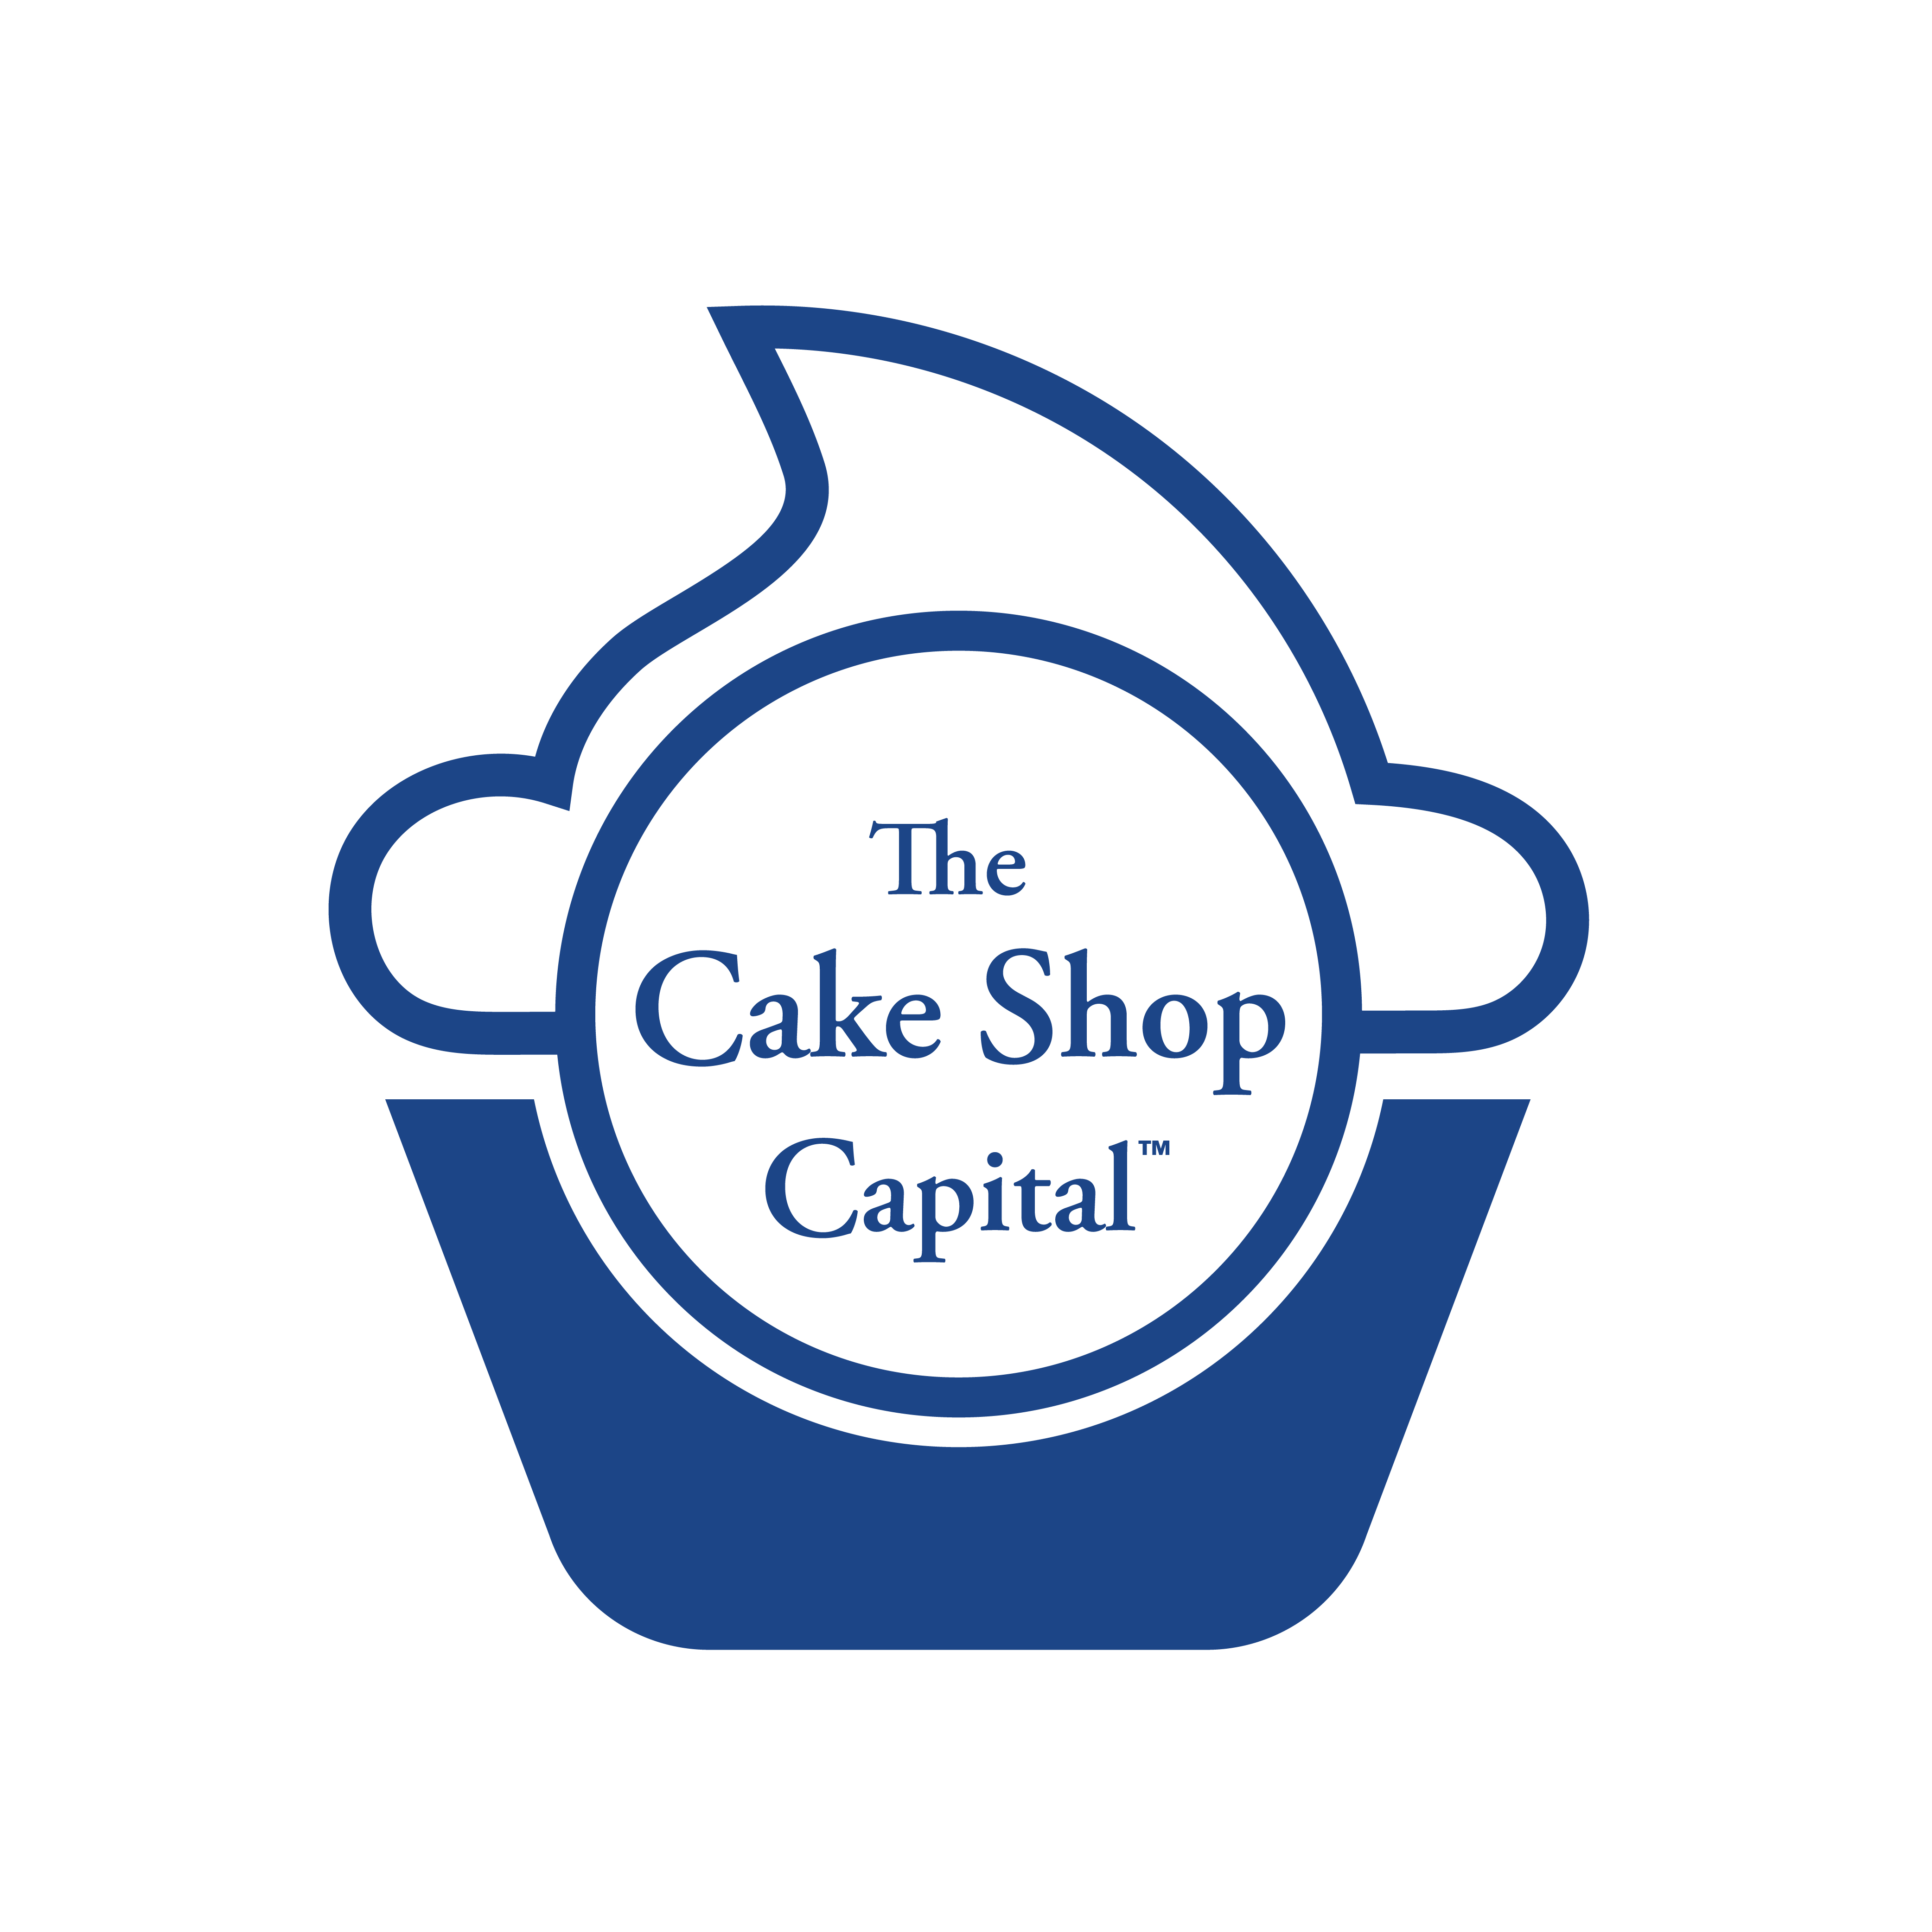 The Cake Shop Capital